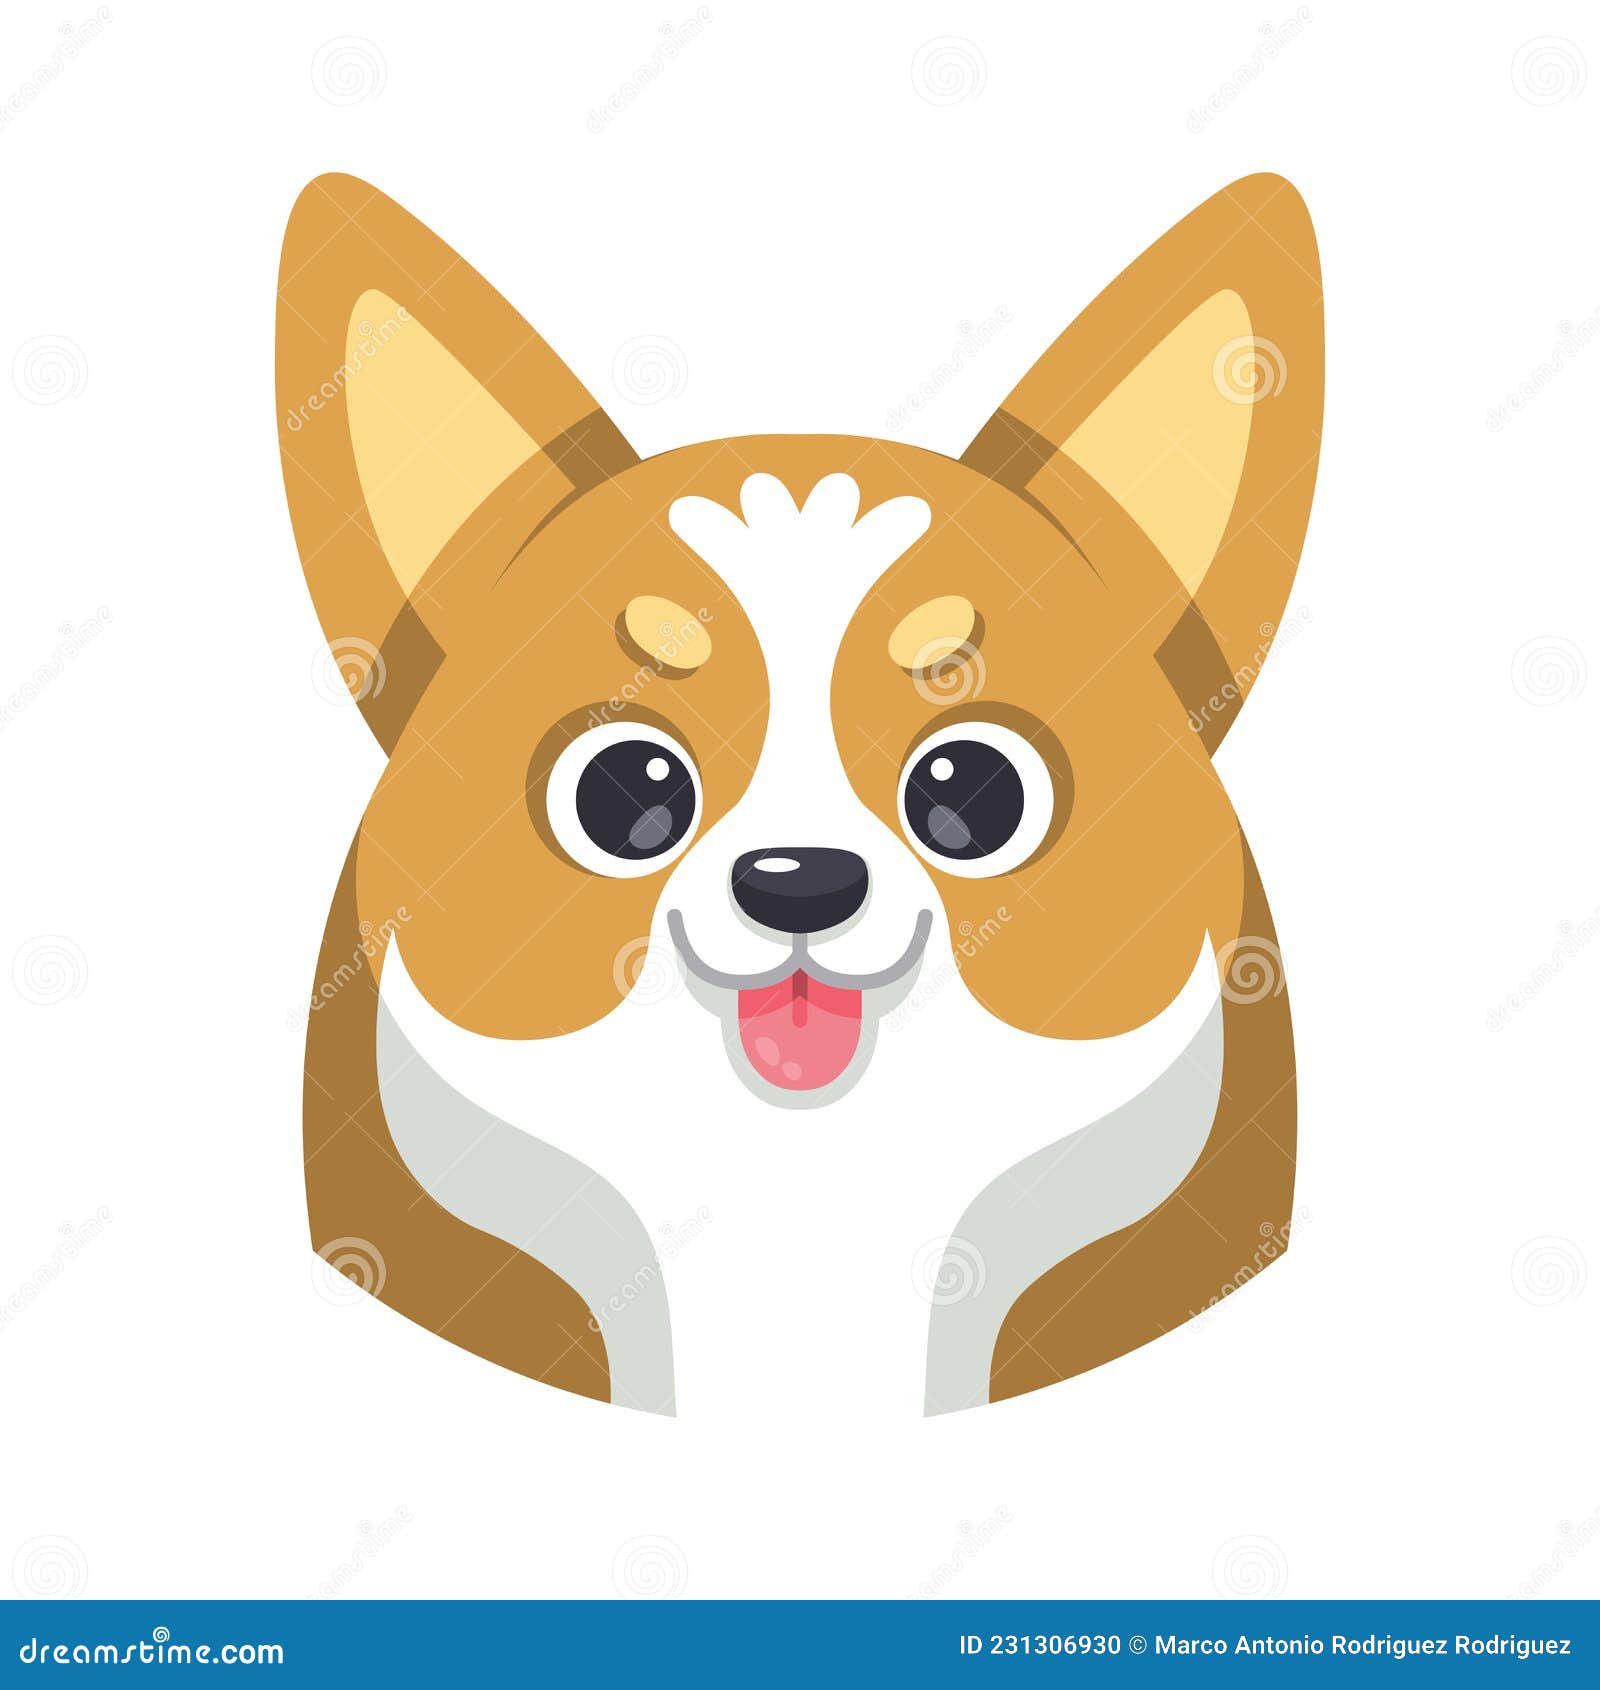 Dog Avatar PNG Transparent Images Free Download  Vector Files  Pngtree